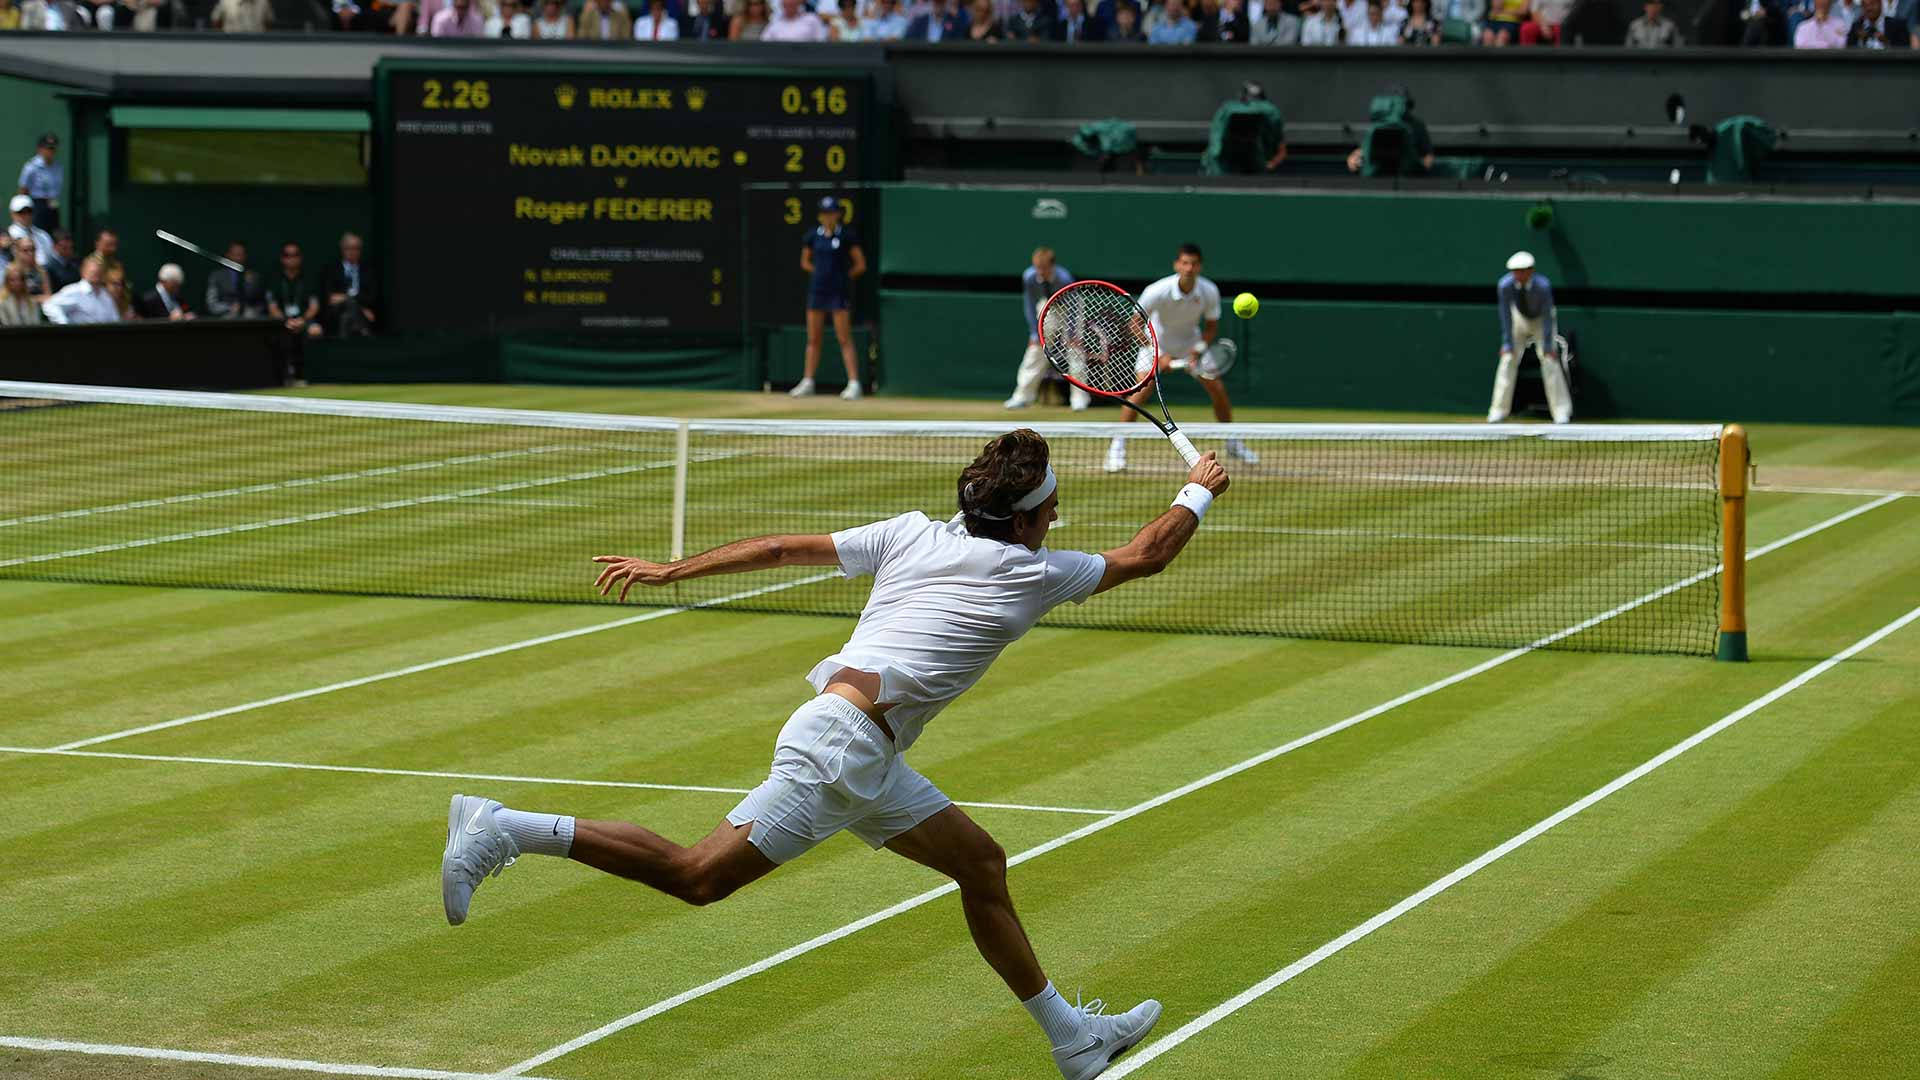 Wimbledon Court With Roger & Novak Background